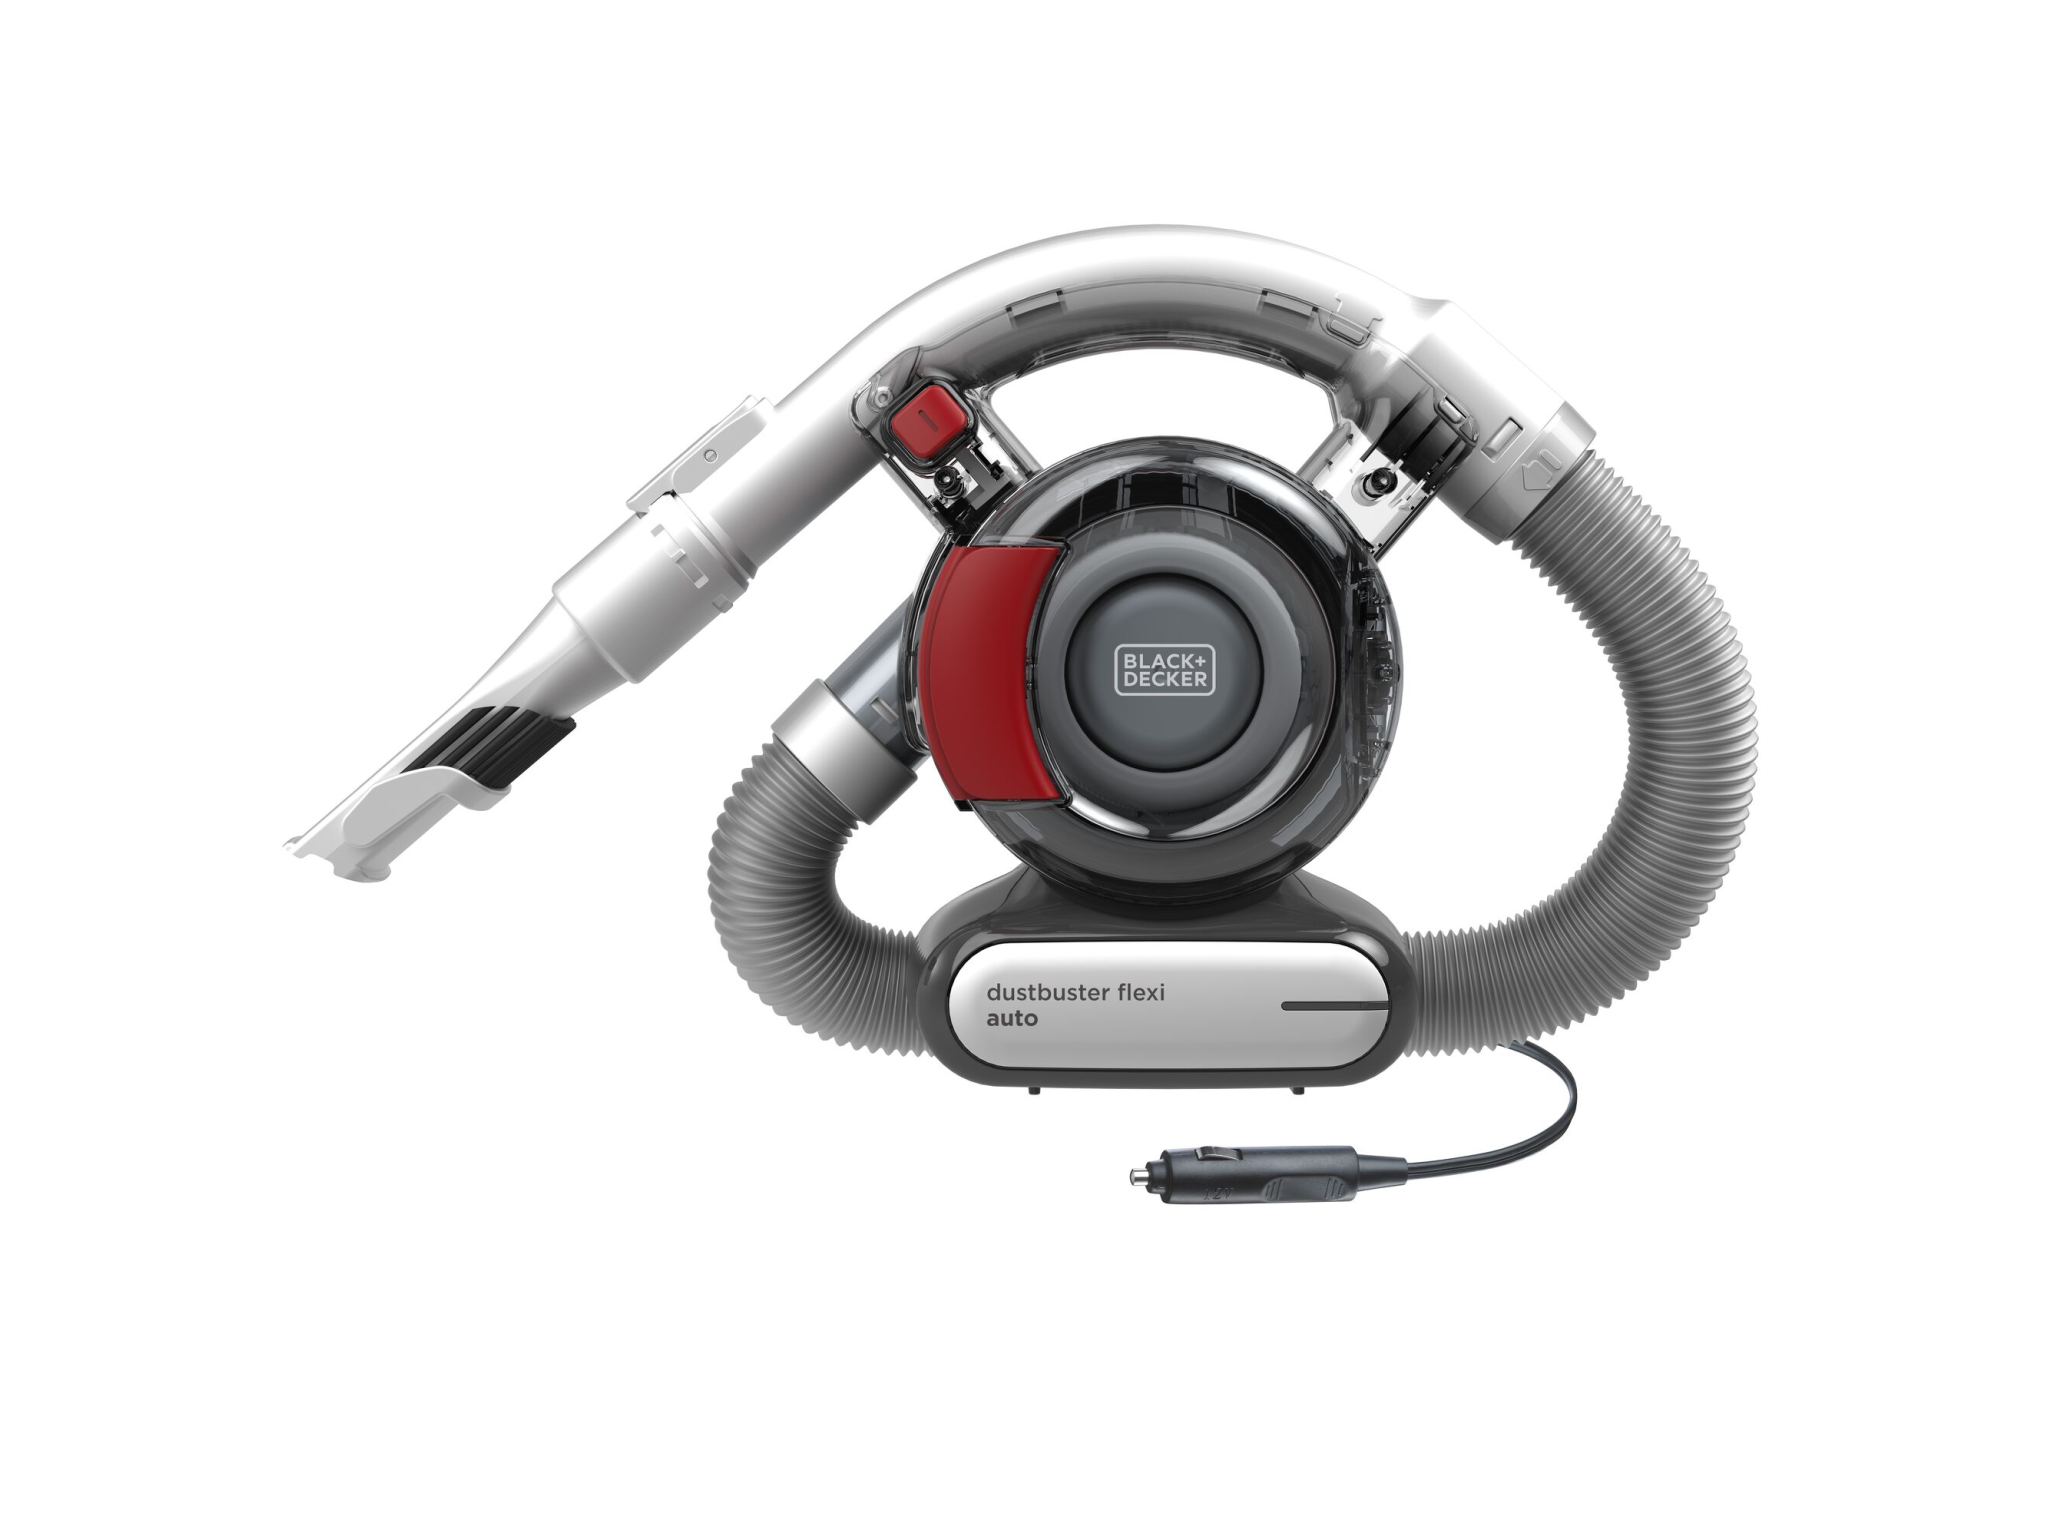 Black + Decker dustbuster flexi vacuum cleaner